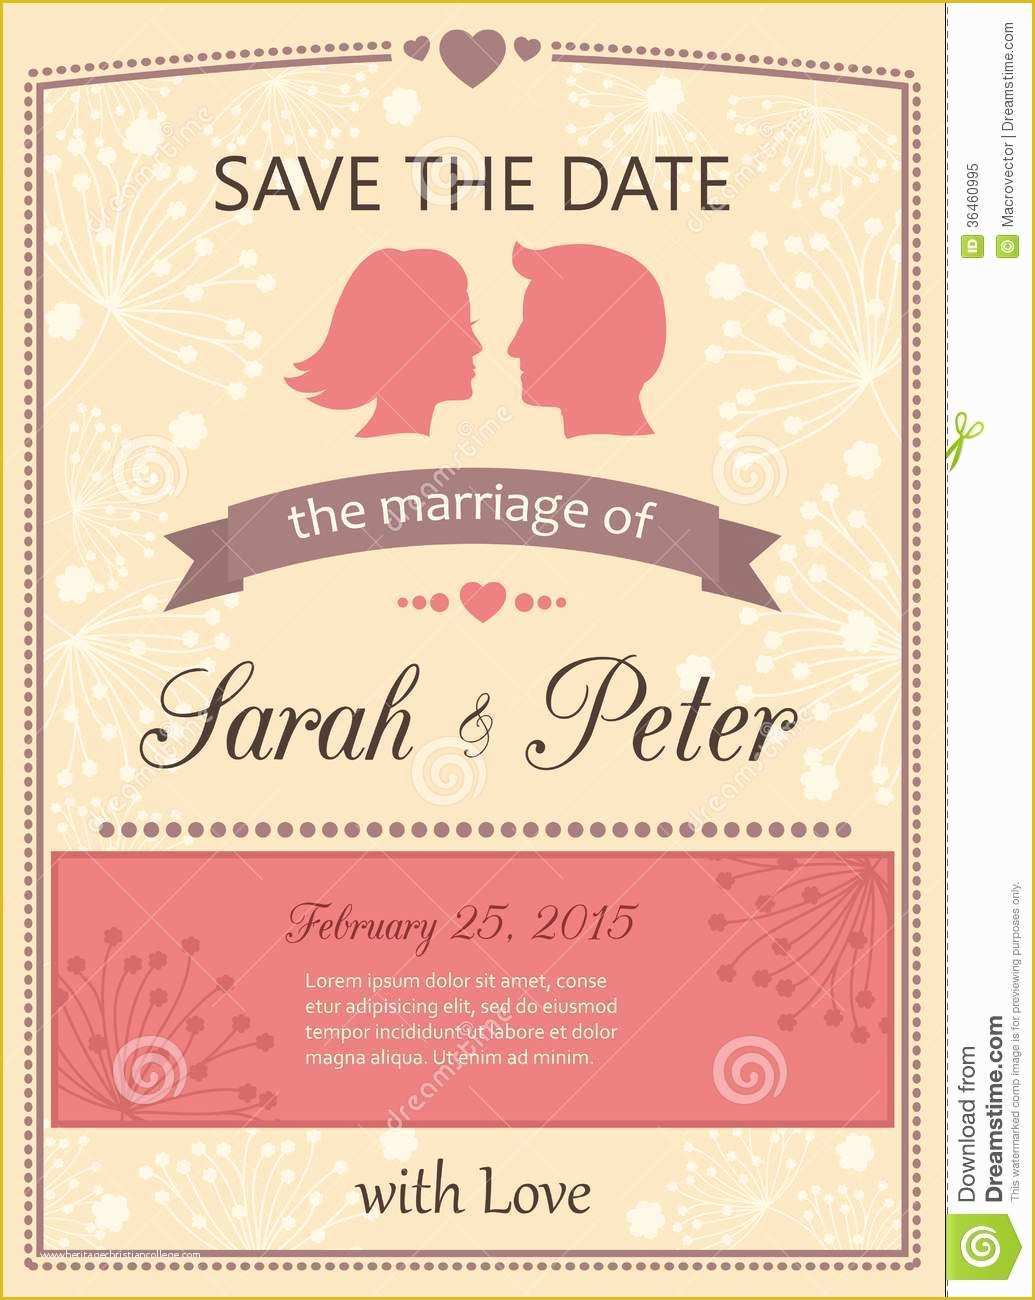 Free Save the Date Wedding Invitation Templates Of Save the Date Invitations Templates Free